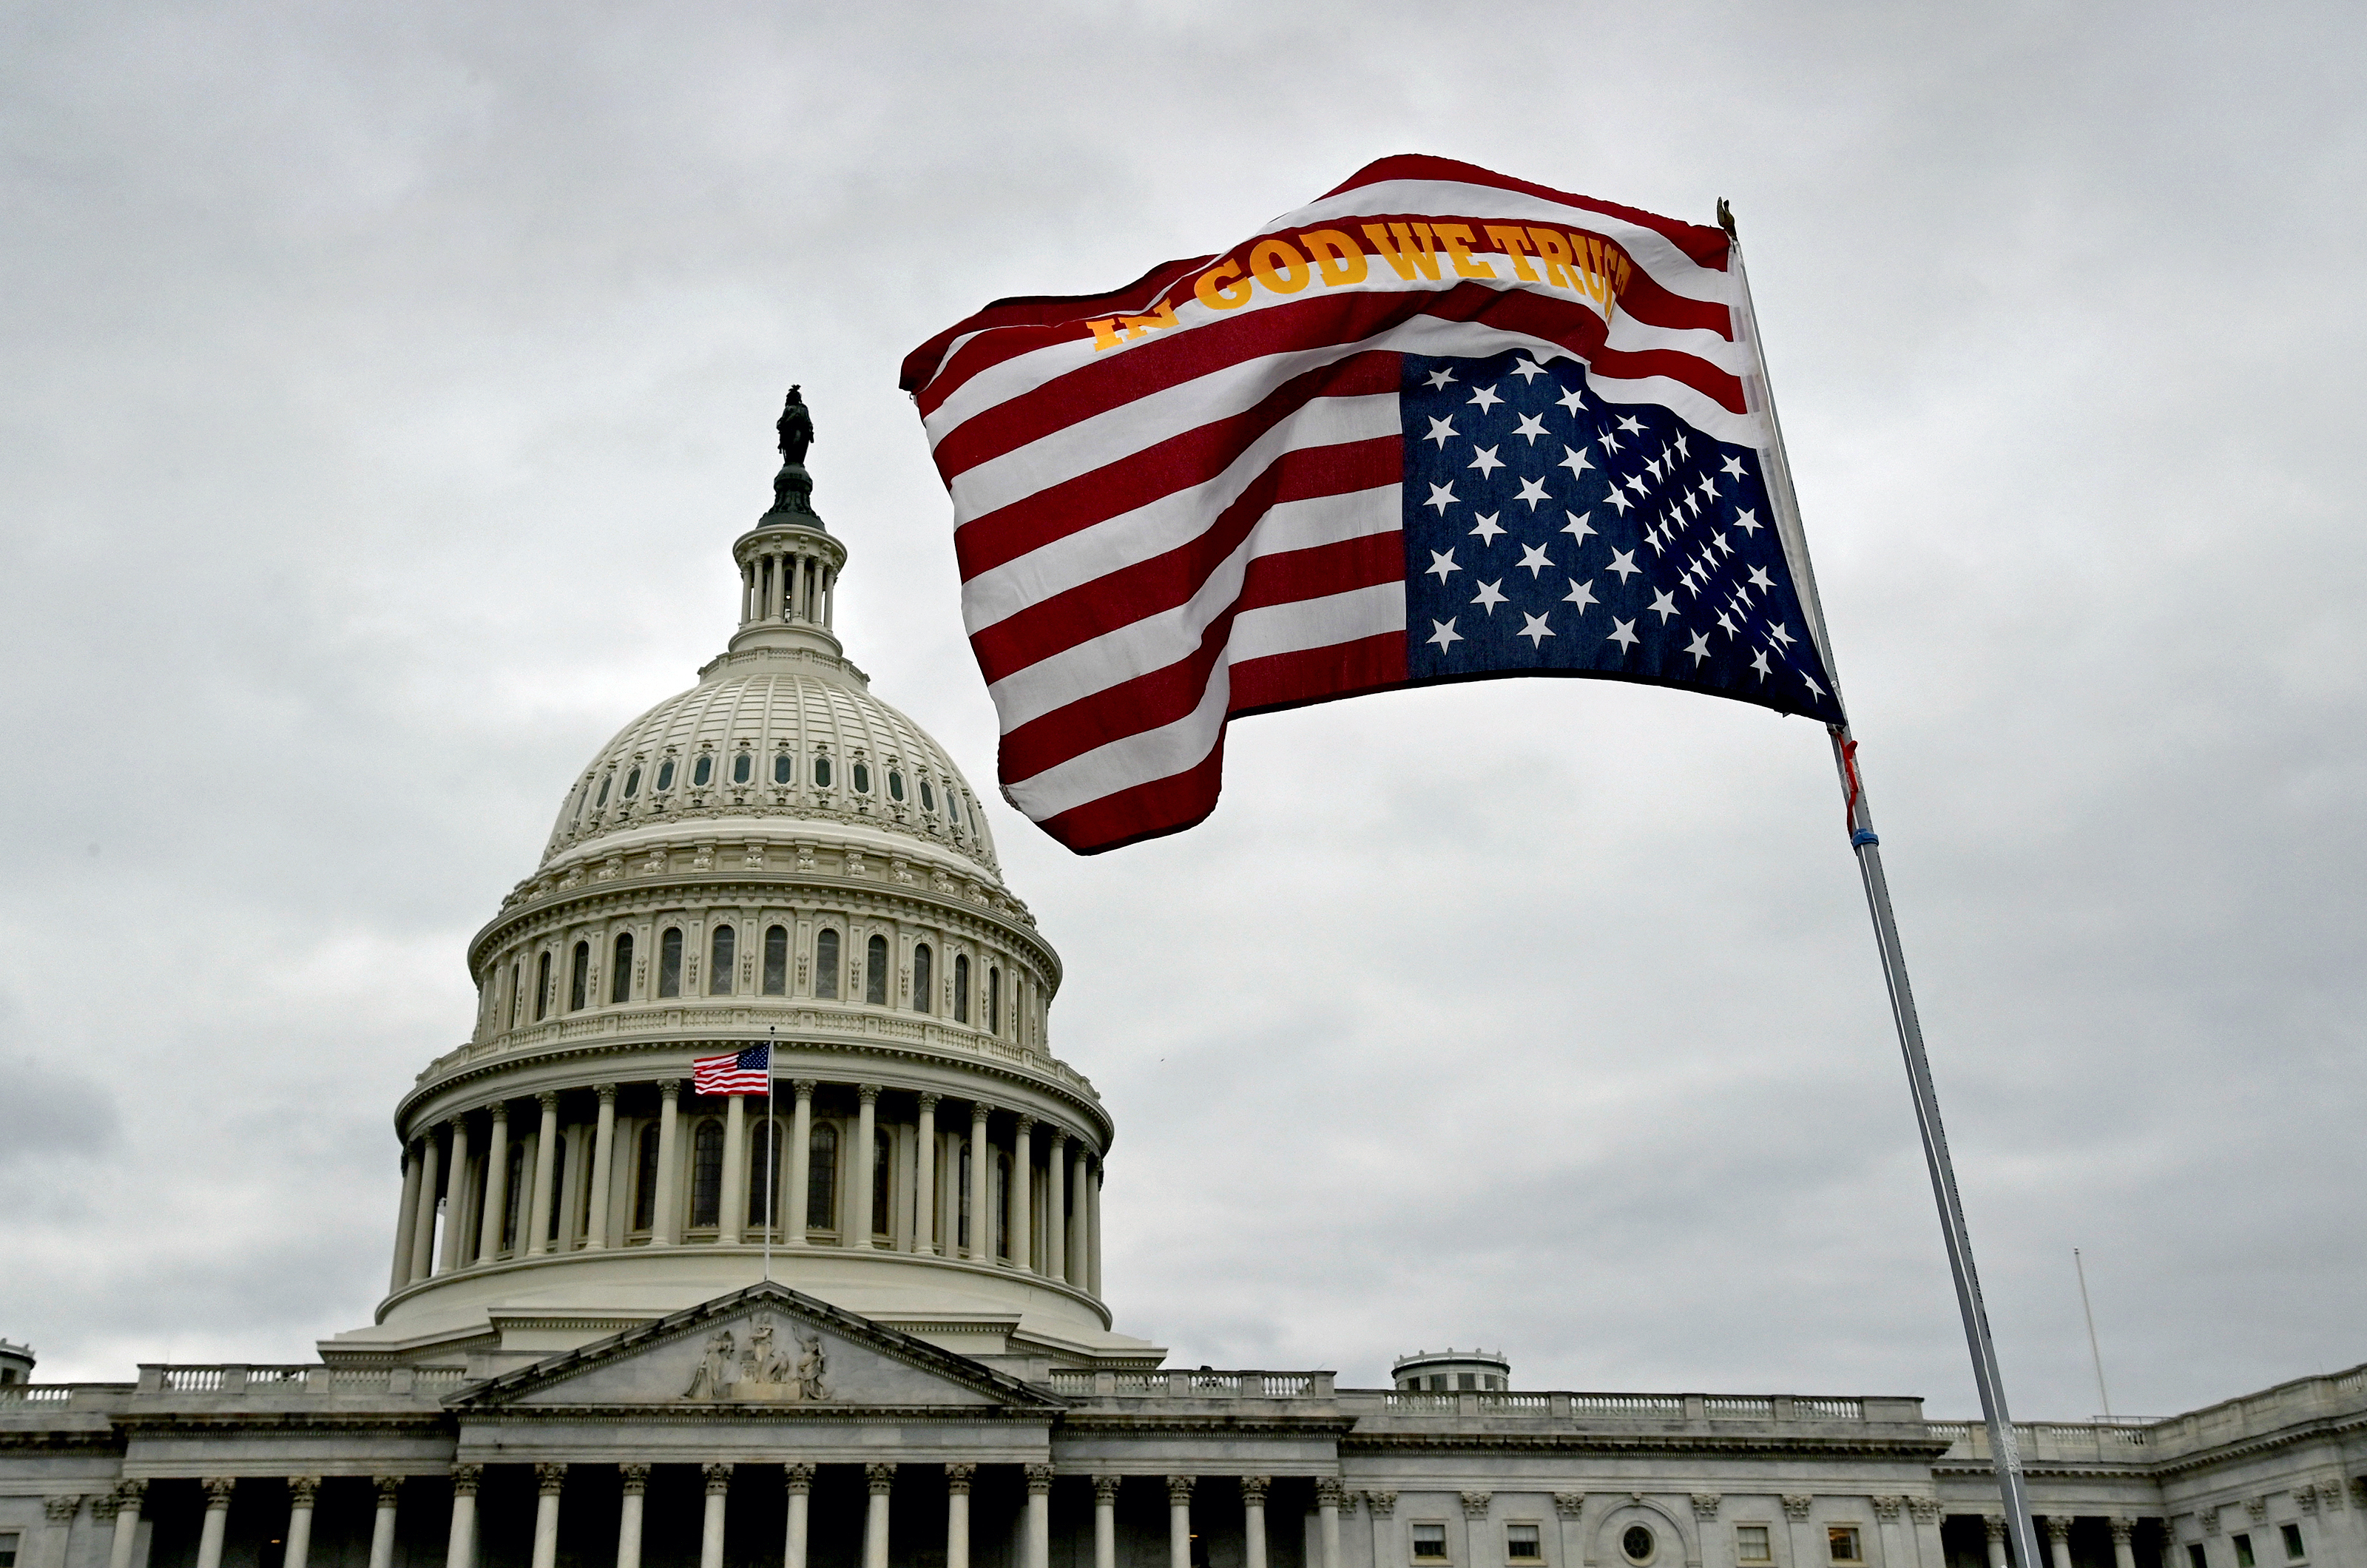 Upside down flag at U.S. Capitol